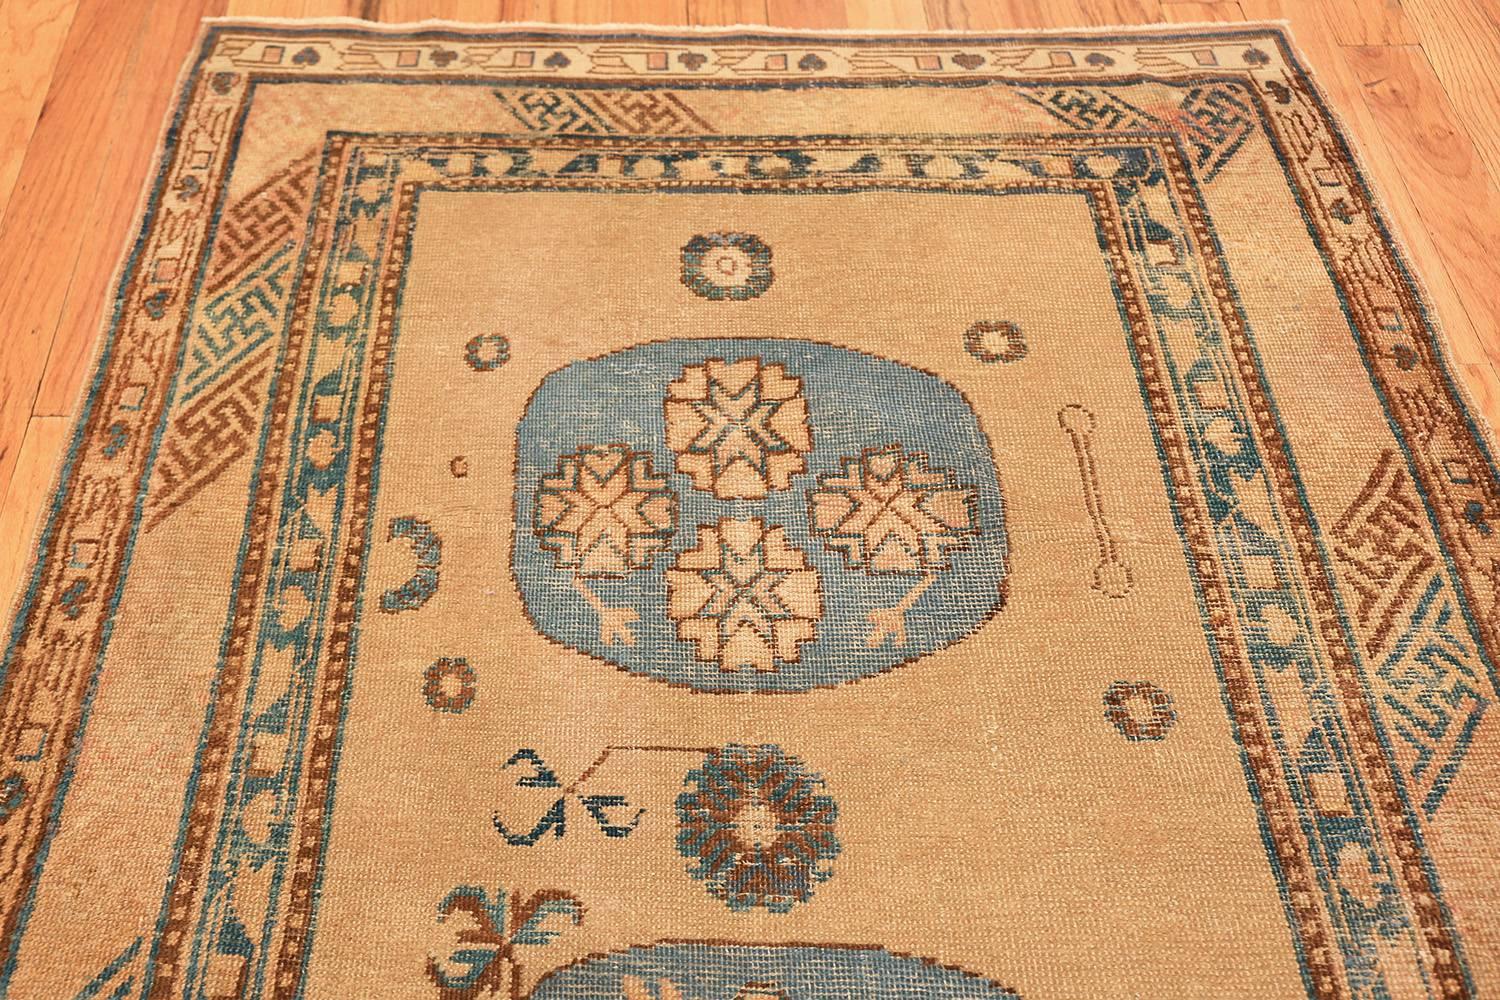 Breathtaking antique East Turkestan Khotan rug, country of origin / rug type: East Turkestan, date circa 1920. Size: 4 ft x 8 ft (1.22 m x 2.44 m)

Antique Khotan rugs, the vast majority of the antique rugs which were woven in the East Turkestan